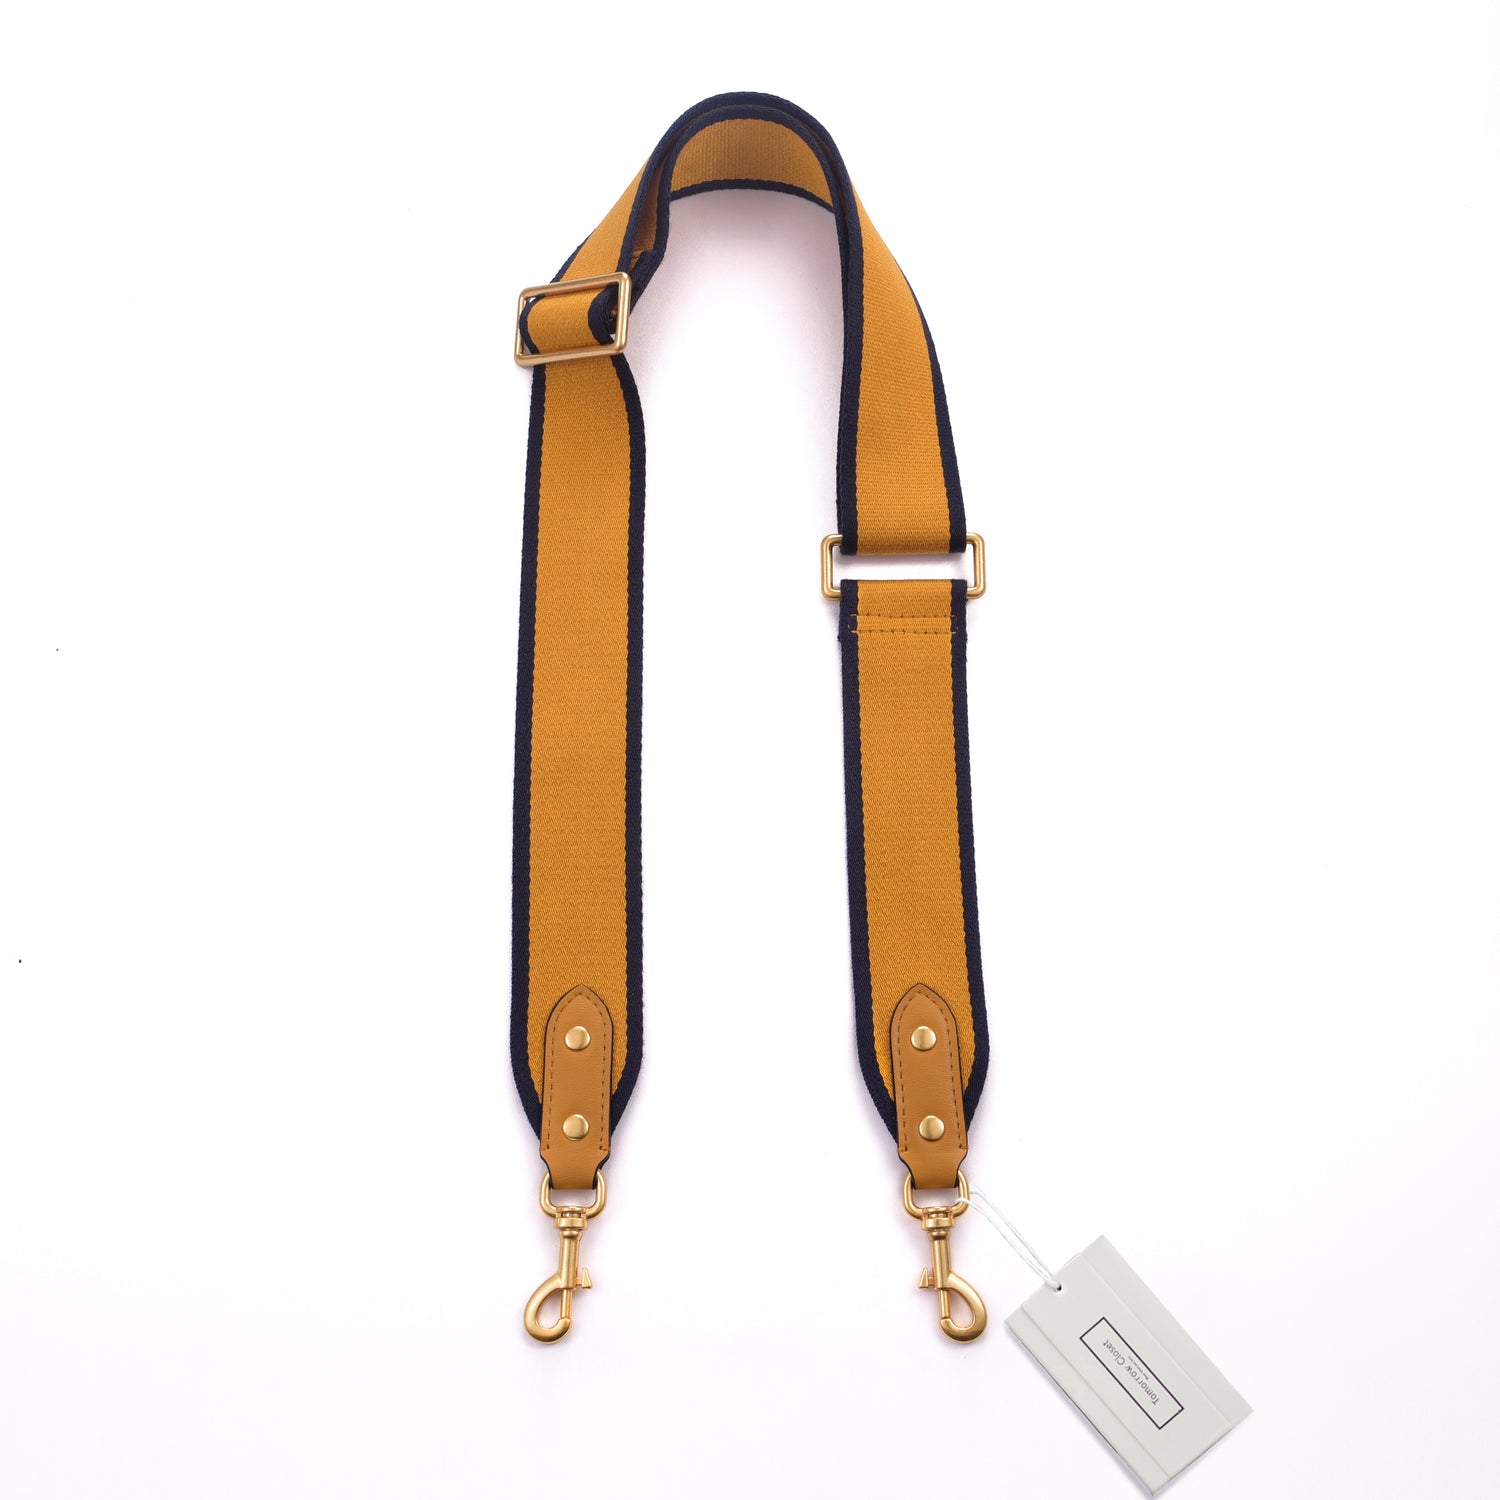 Bag straps